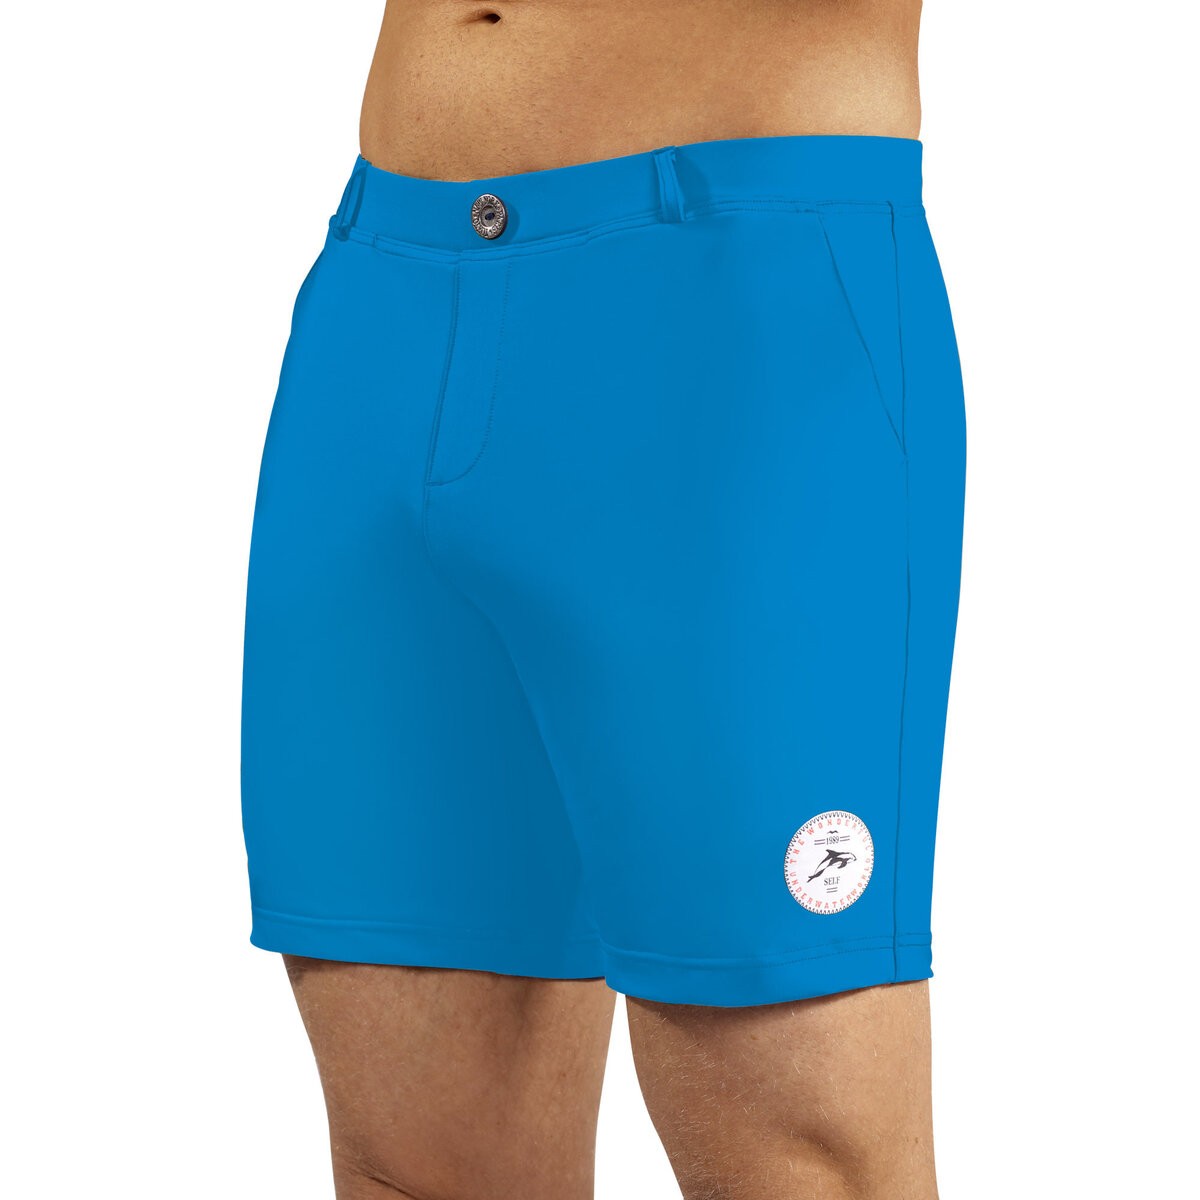 Pánské plavky Swimming shorts comfort 83428Y - tmavě modrá - Self, XL i10_P51604_2:93_